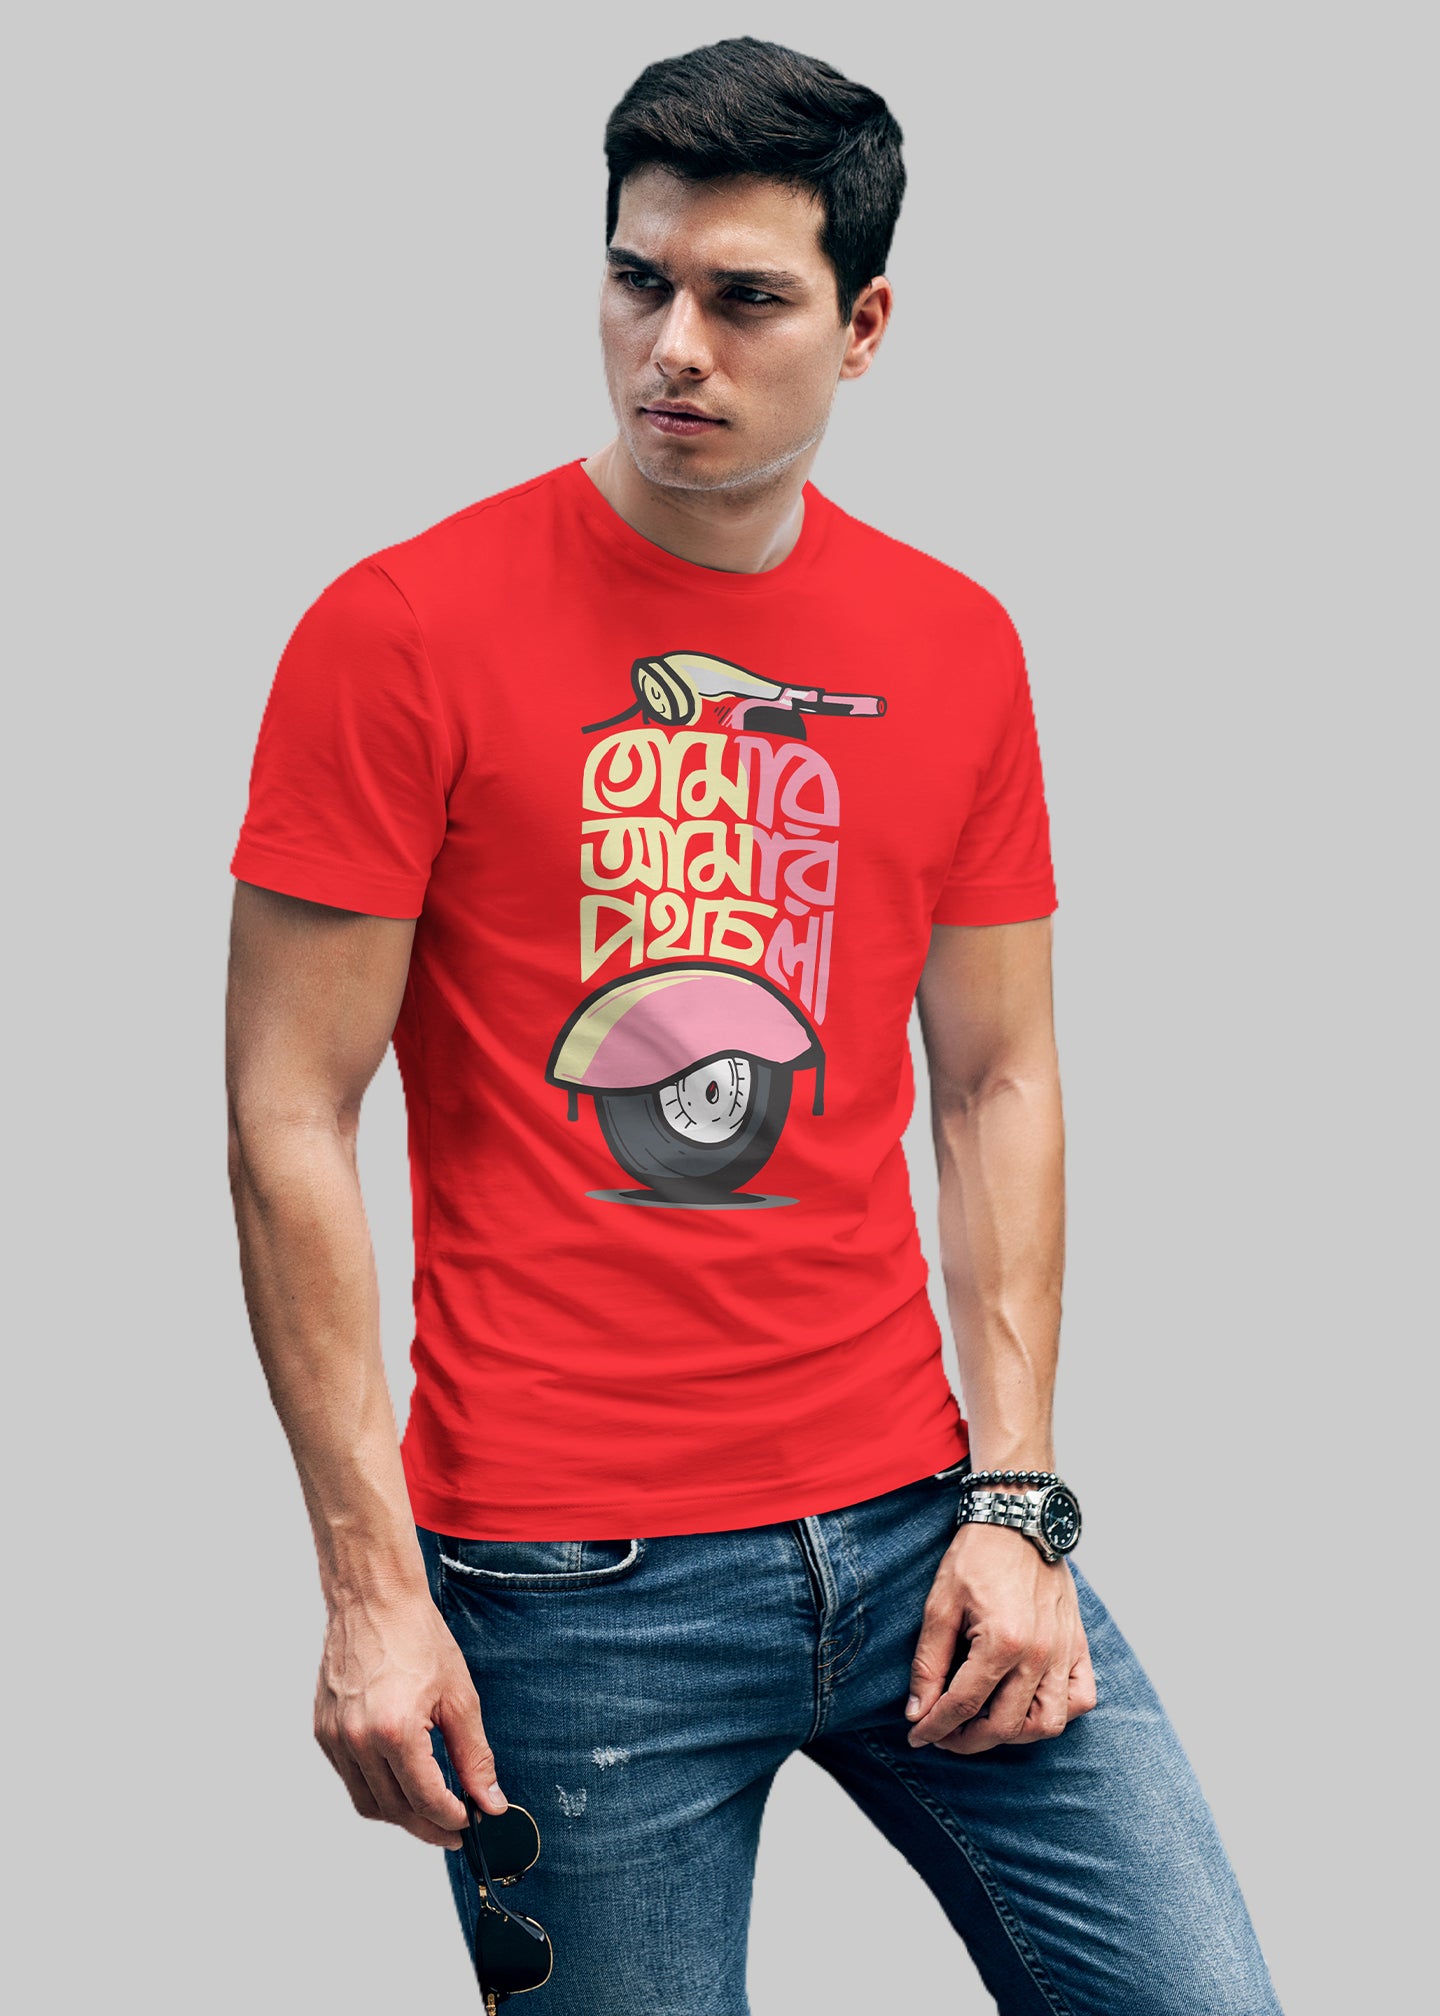 Tomar amar pothchola Printed Half Sleeve Premium Cotton T-shirt For Men